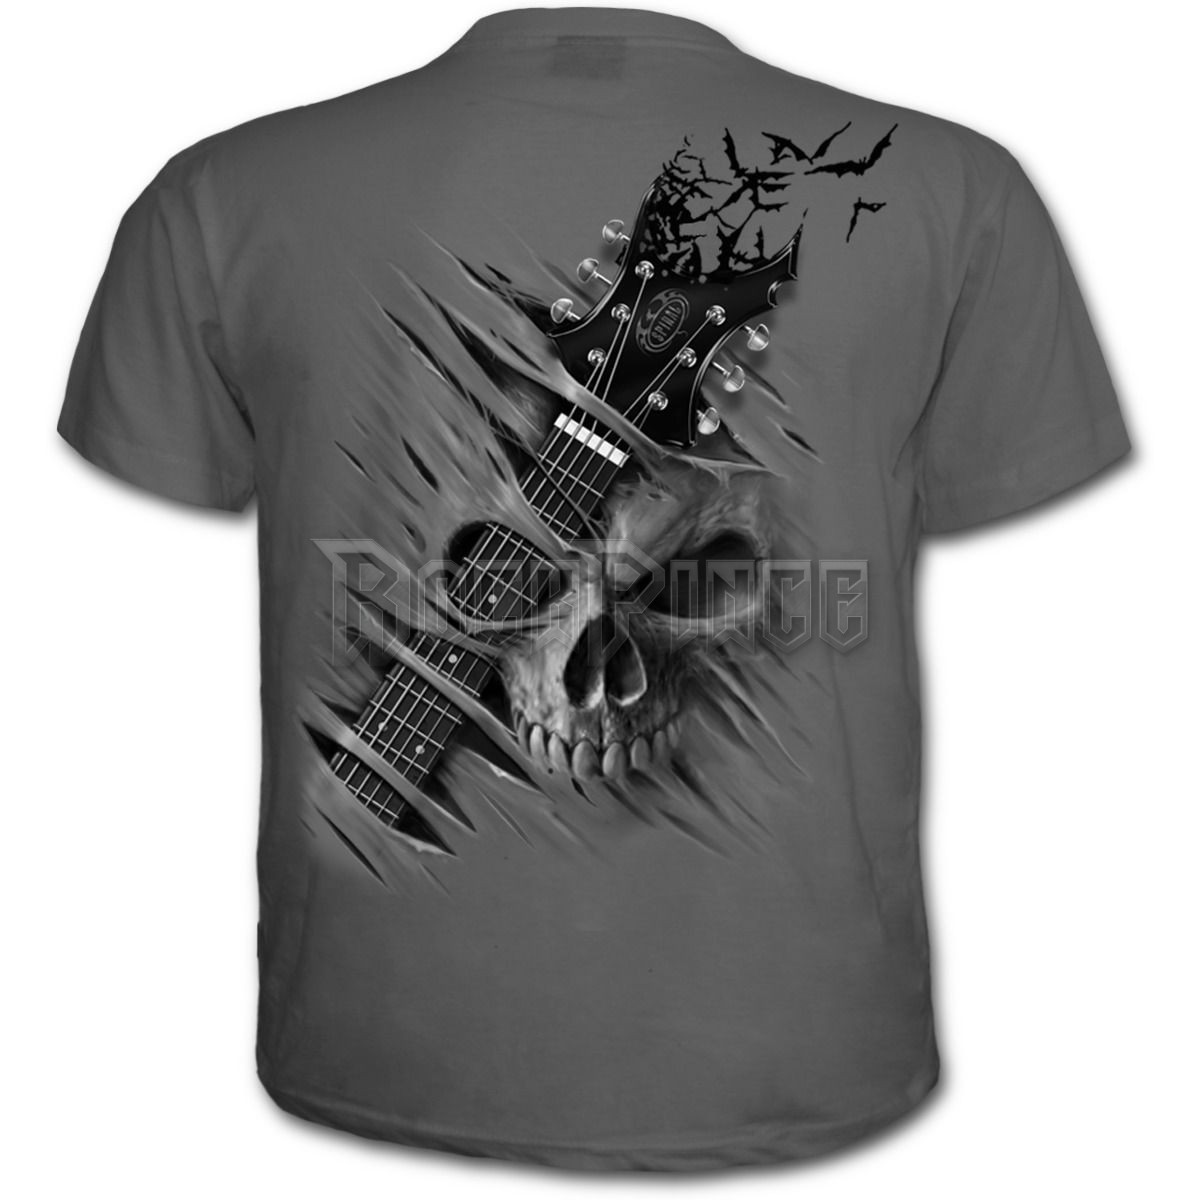 NIGHT RIFFS - T-Shirt Charcoal (Plain) - E025M115